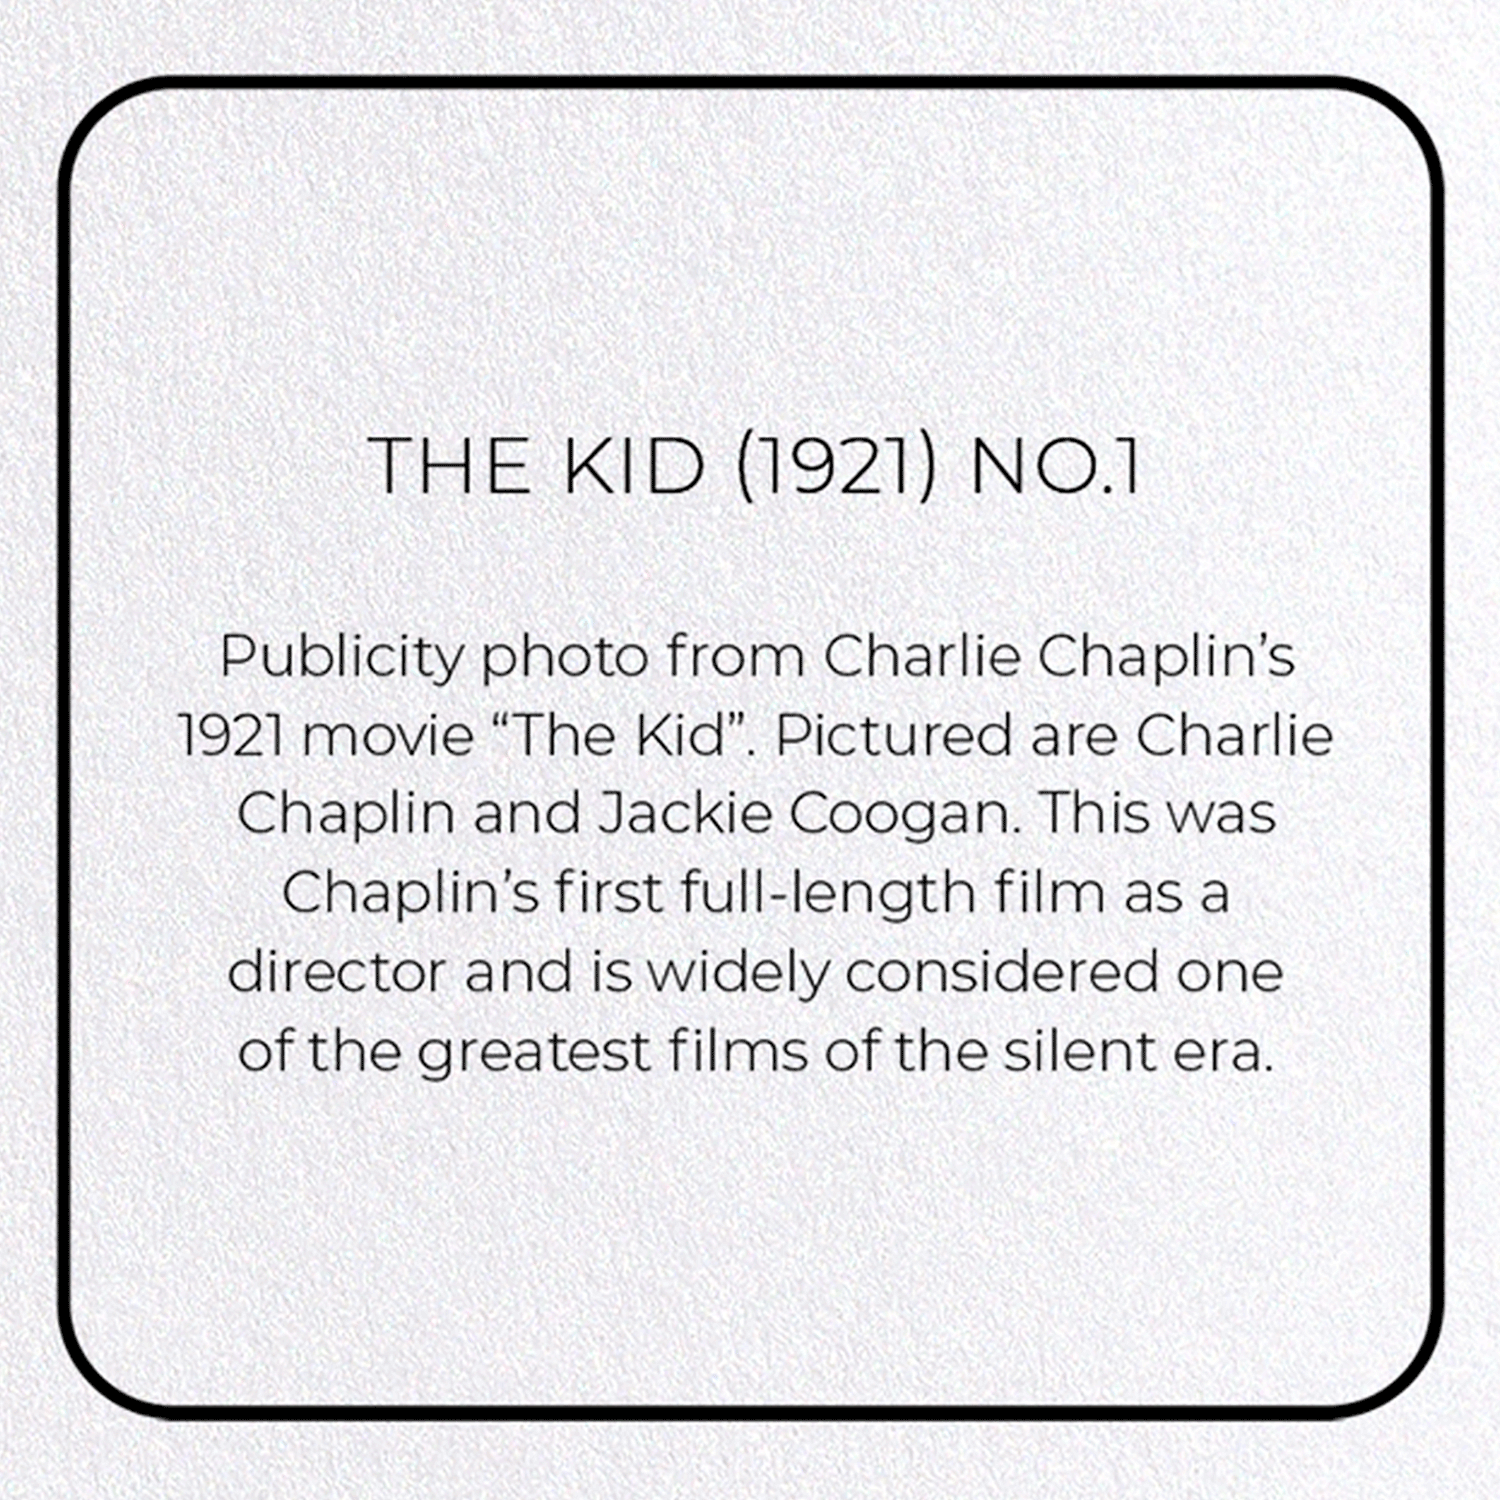 THE KID (1921) NO.1